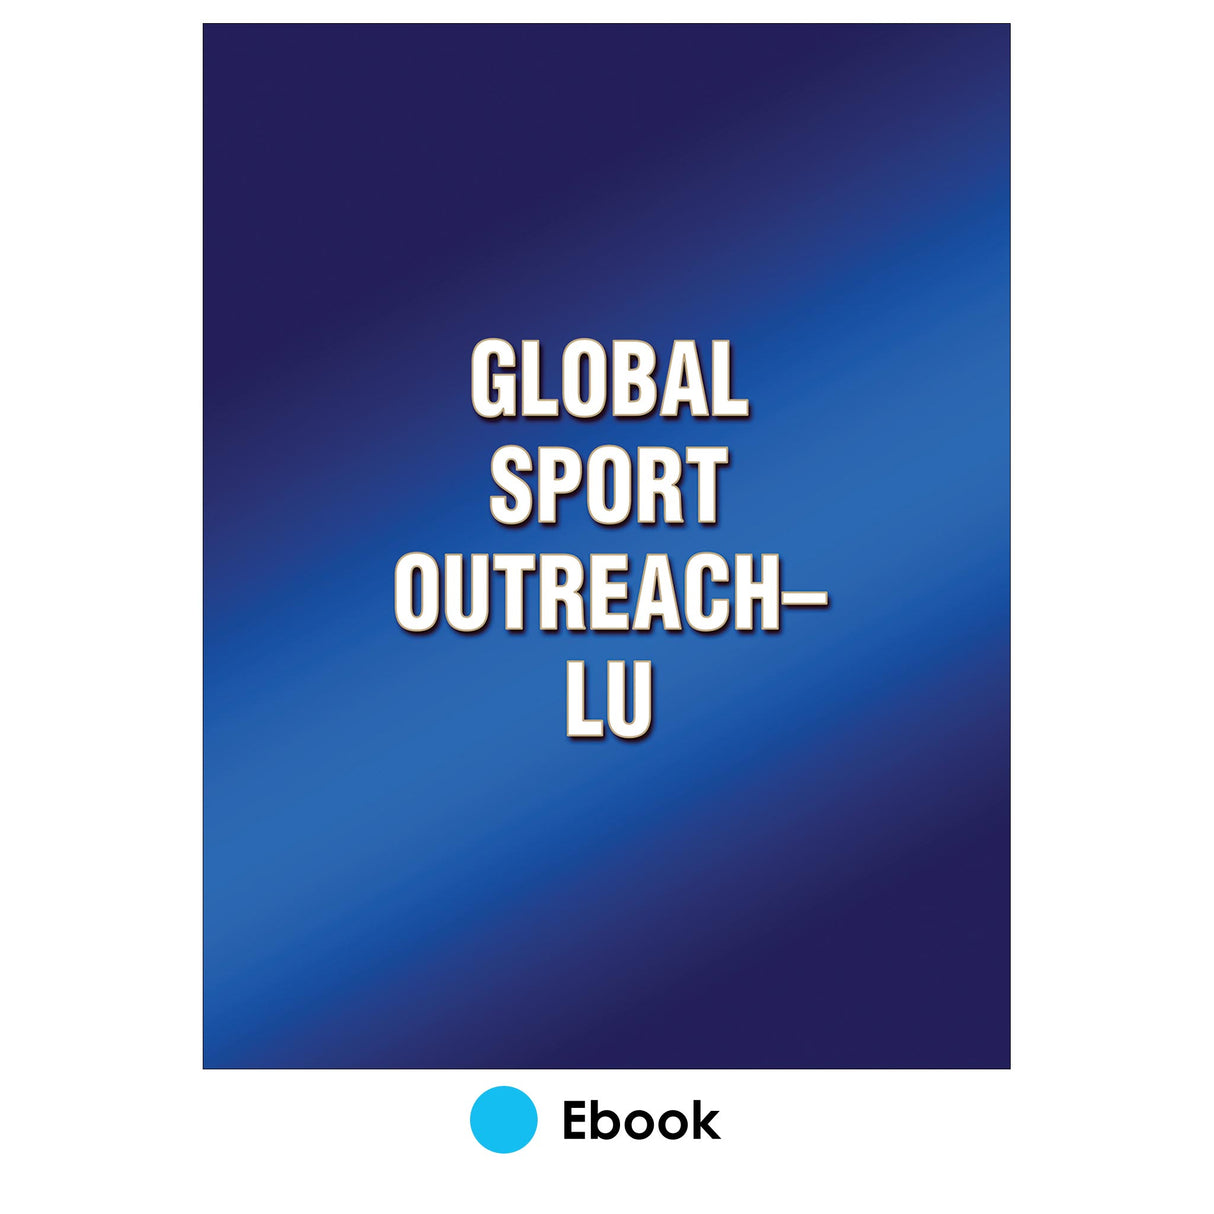 Global Sport Outreach-LU